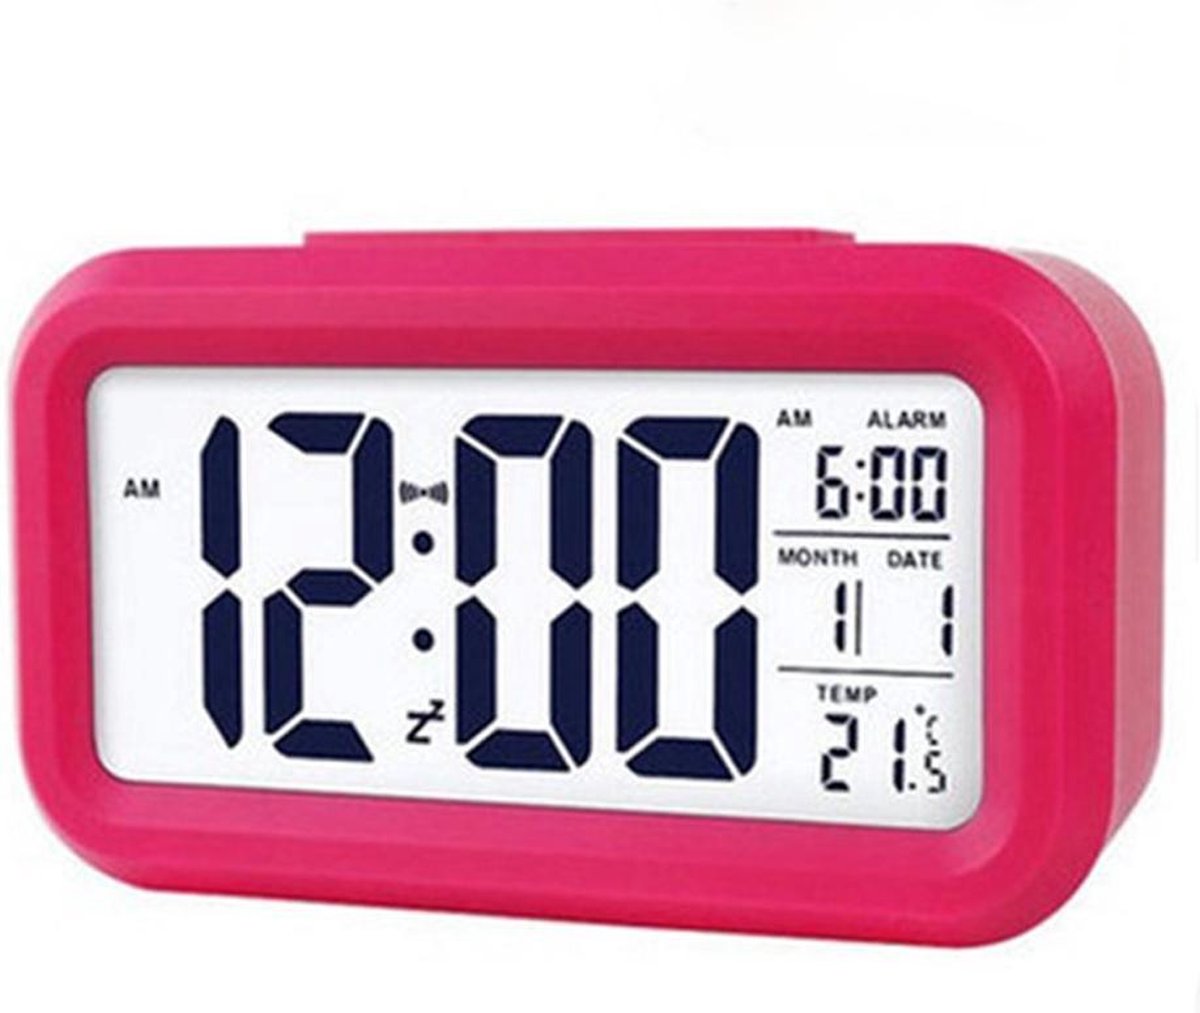 TKMARS Digitale Wekker - Alarm Klok met Temperatuur, Kalender en LED Verlichting - Roze